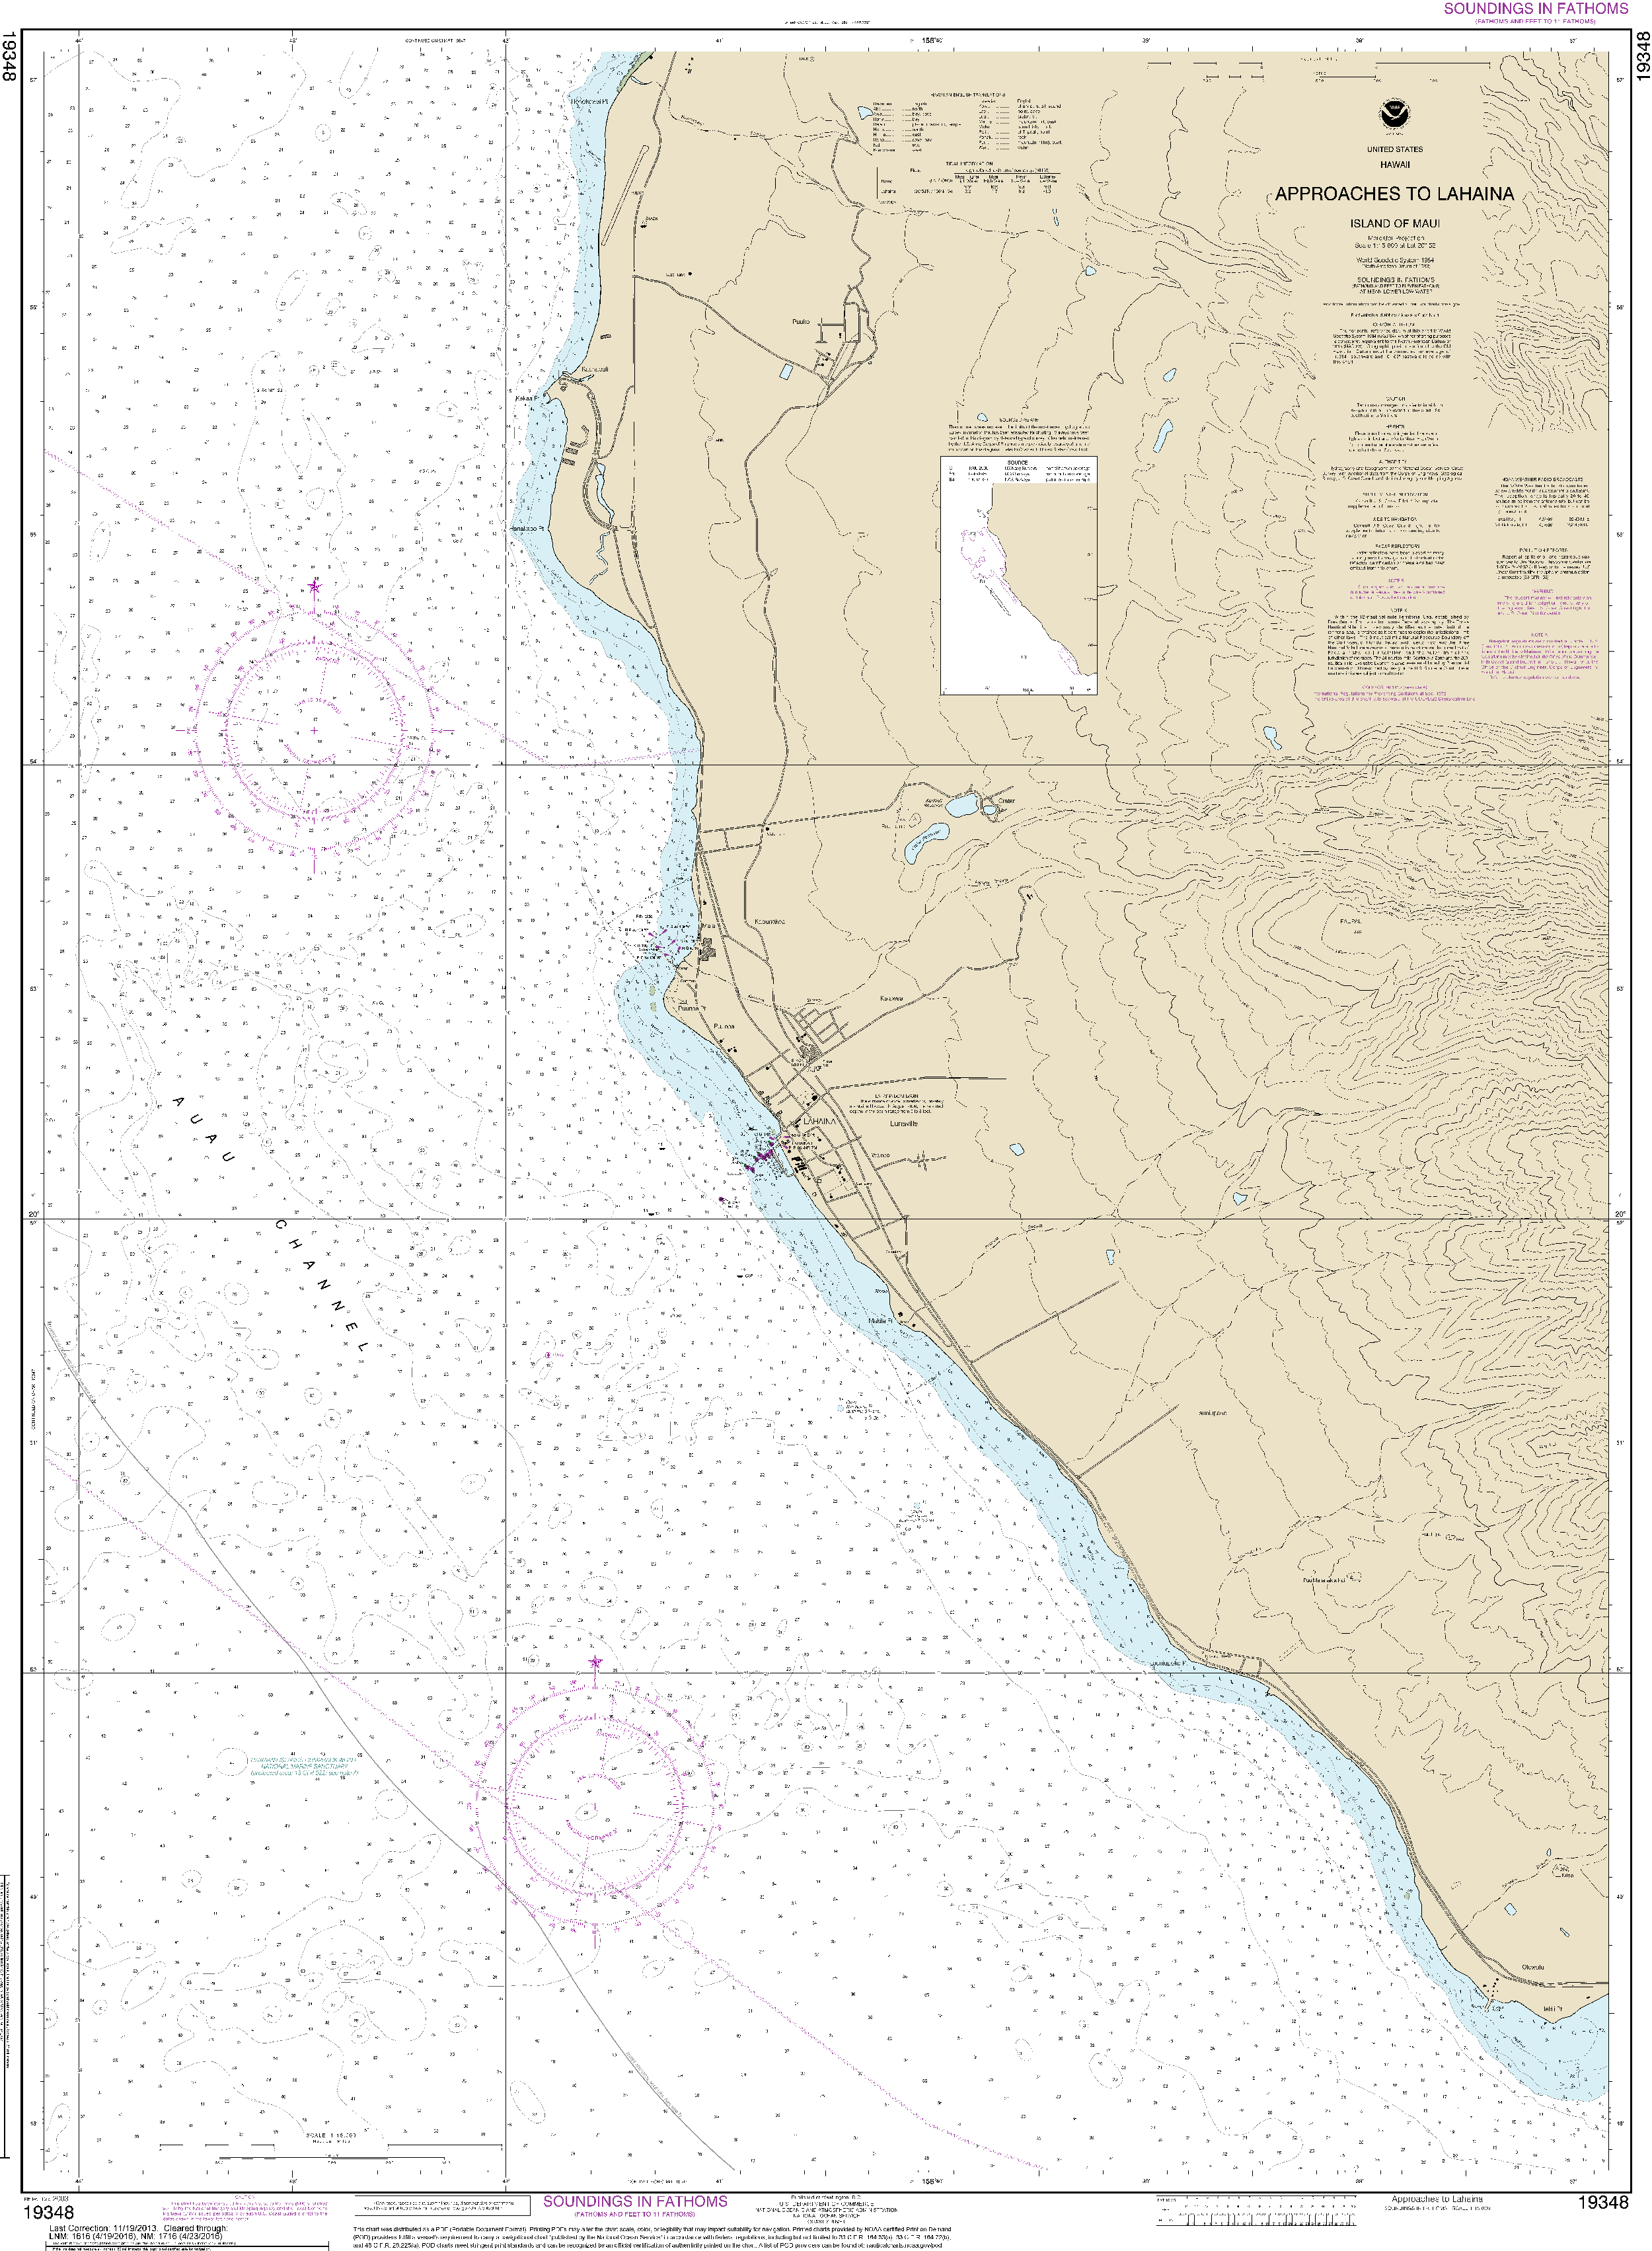 NOAA Nautical Chart 19348: Approaches to Lahaina, Island of Maui